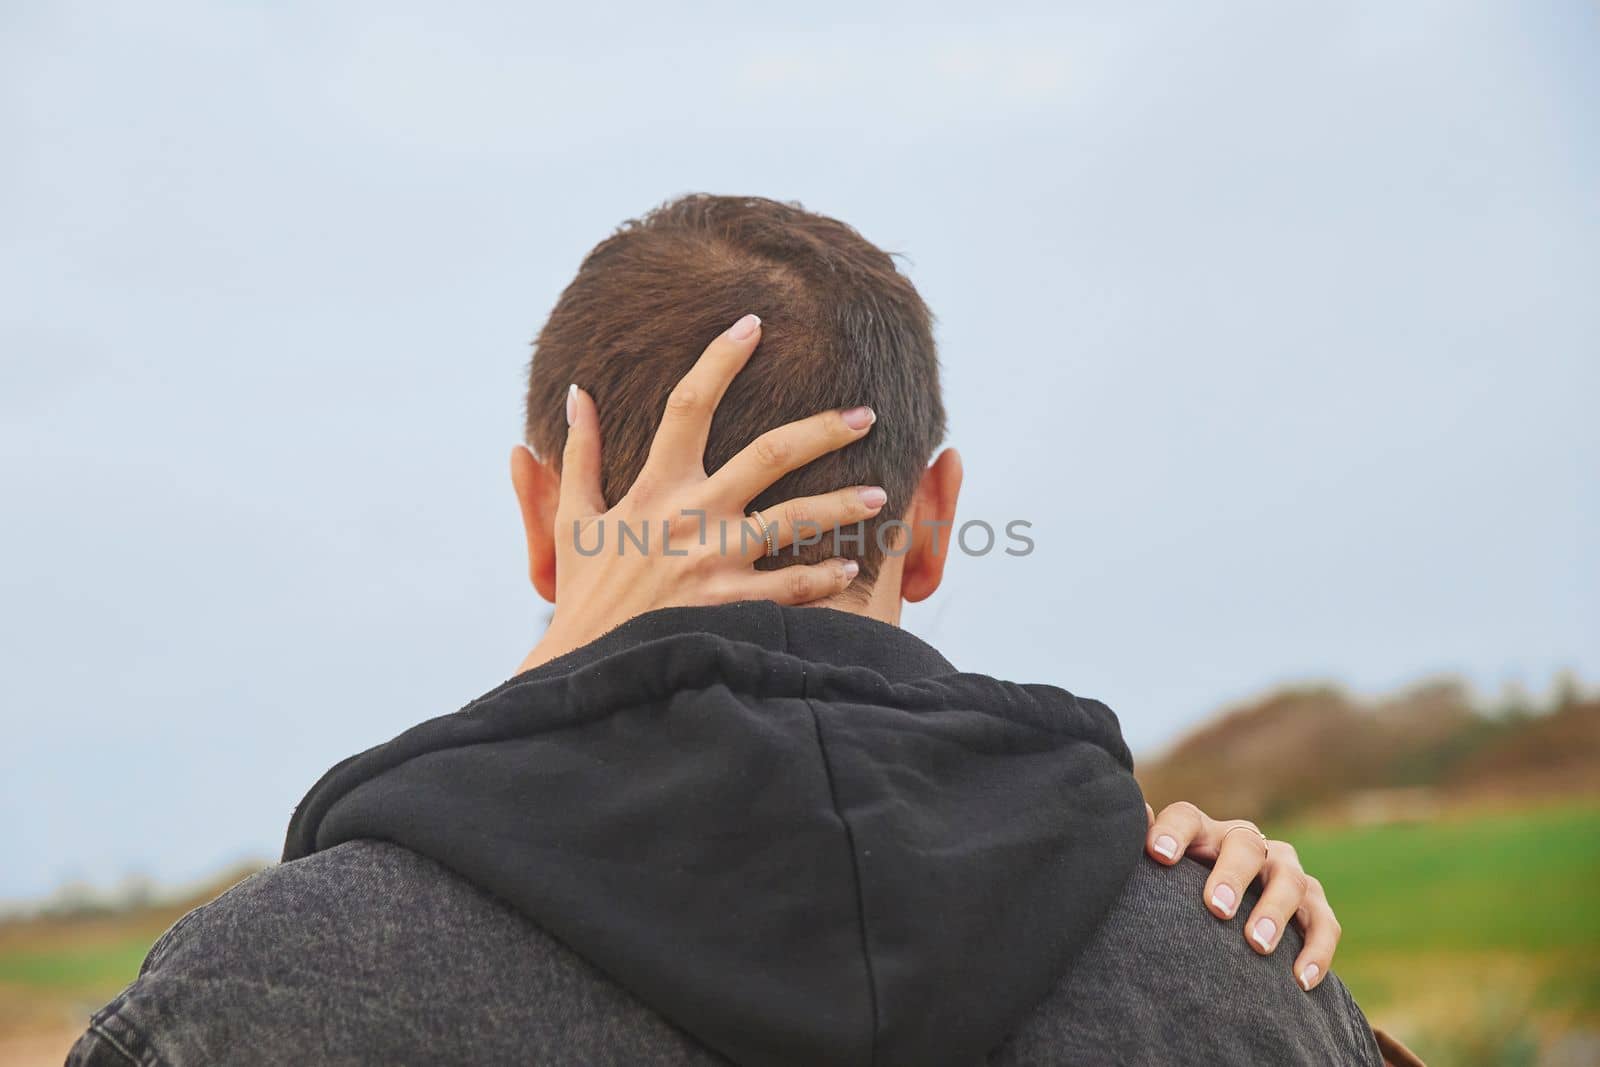 Newlyweds kissing on the beach in Denmark by Viktor_Osypenko